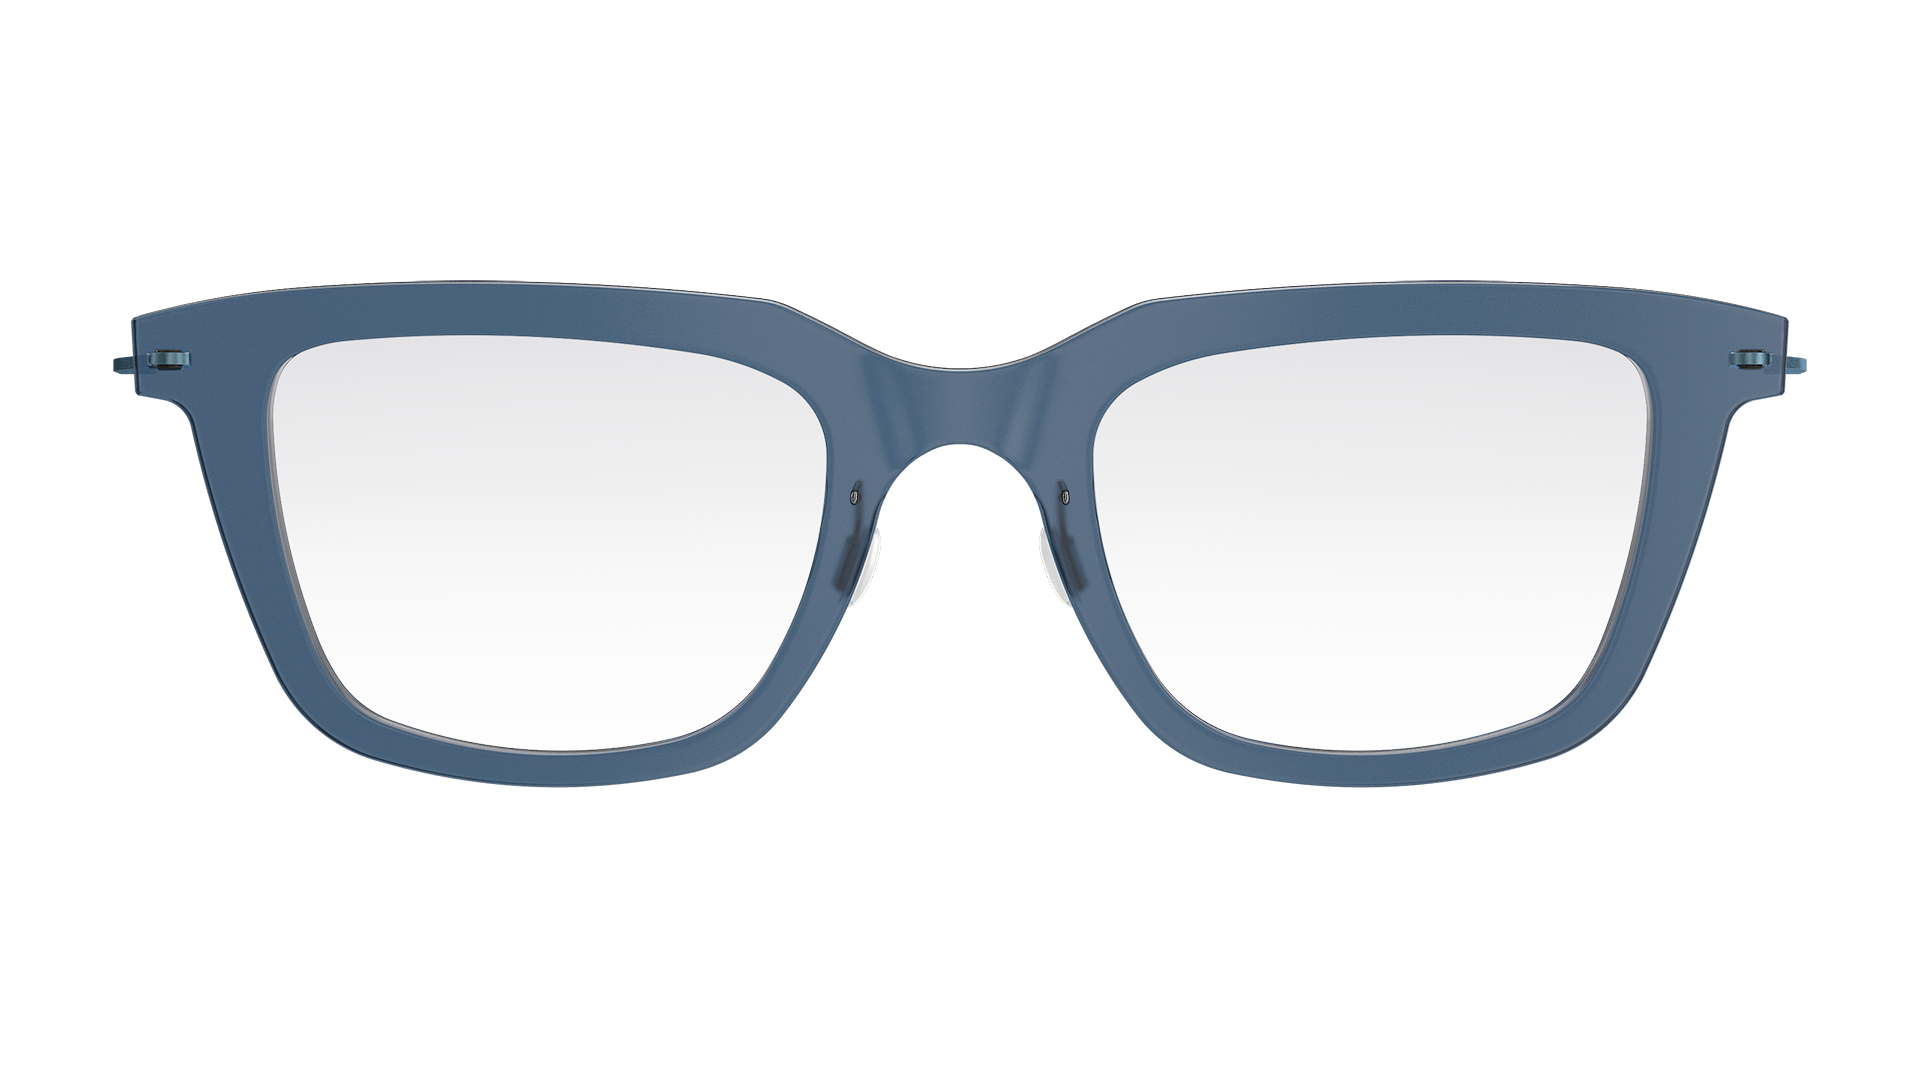 LINDBERG now Model 6601 C14M semi-transparent blue glasses with titanium temples